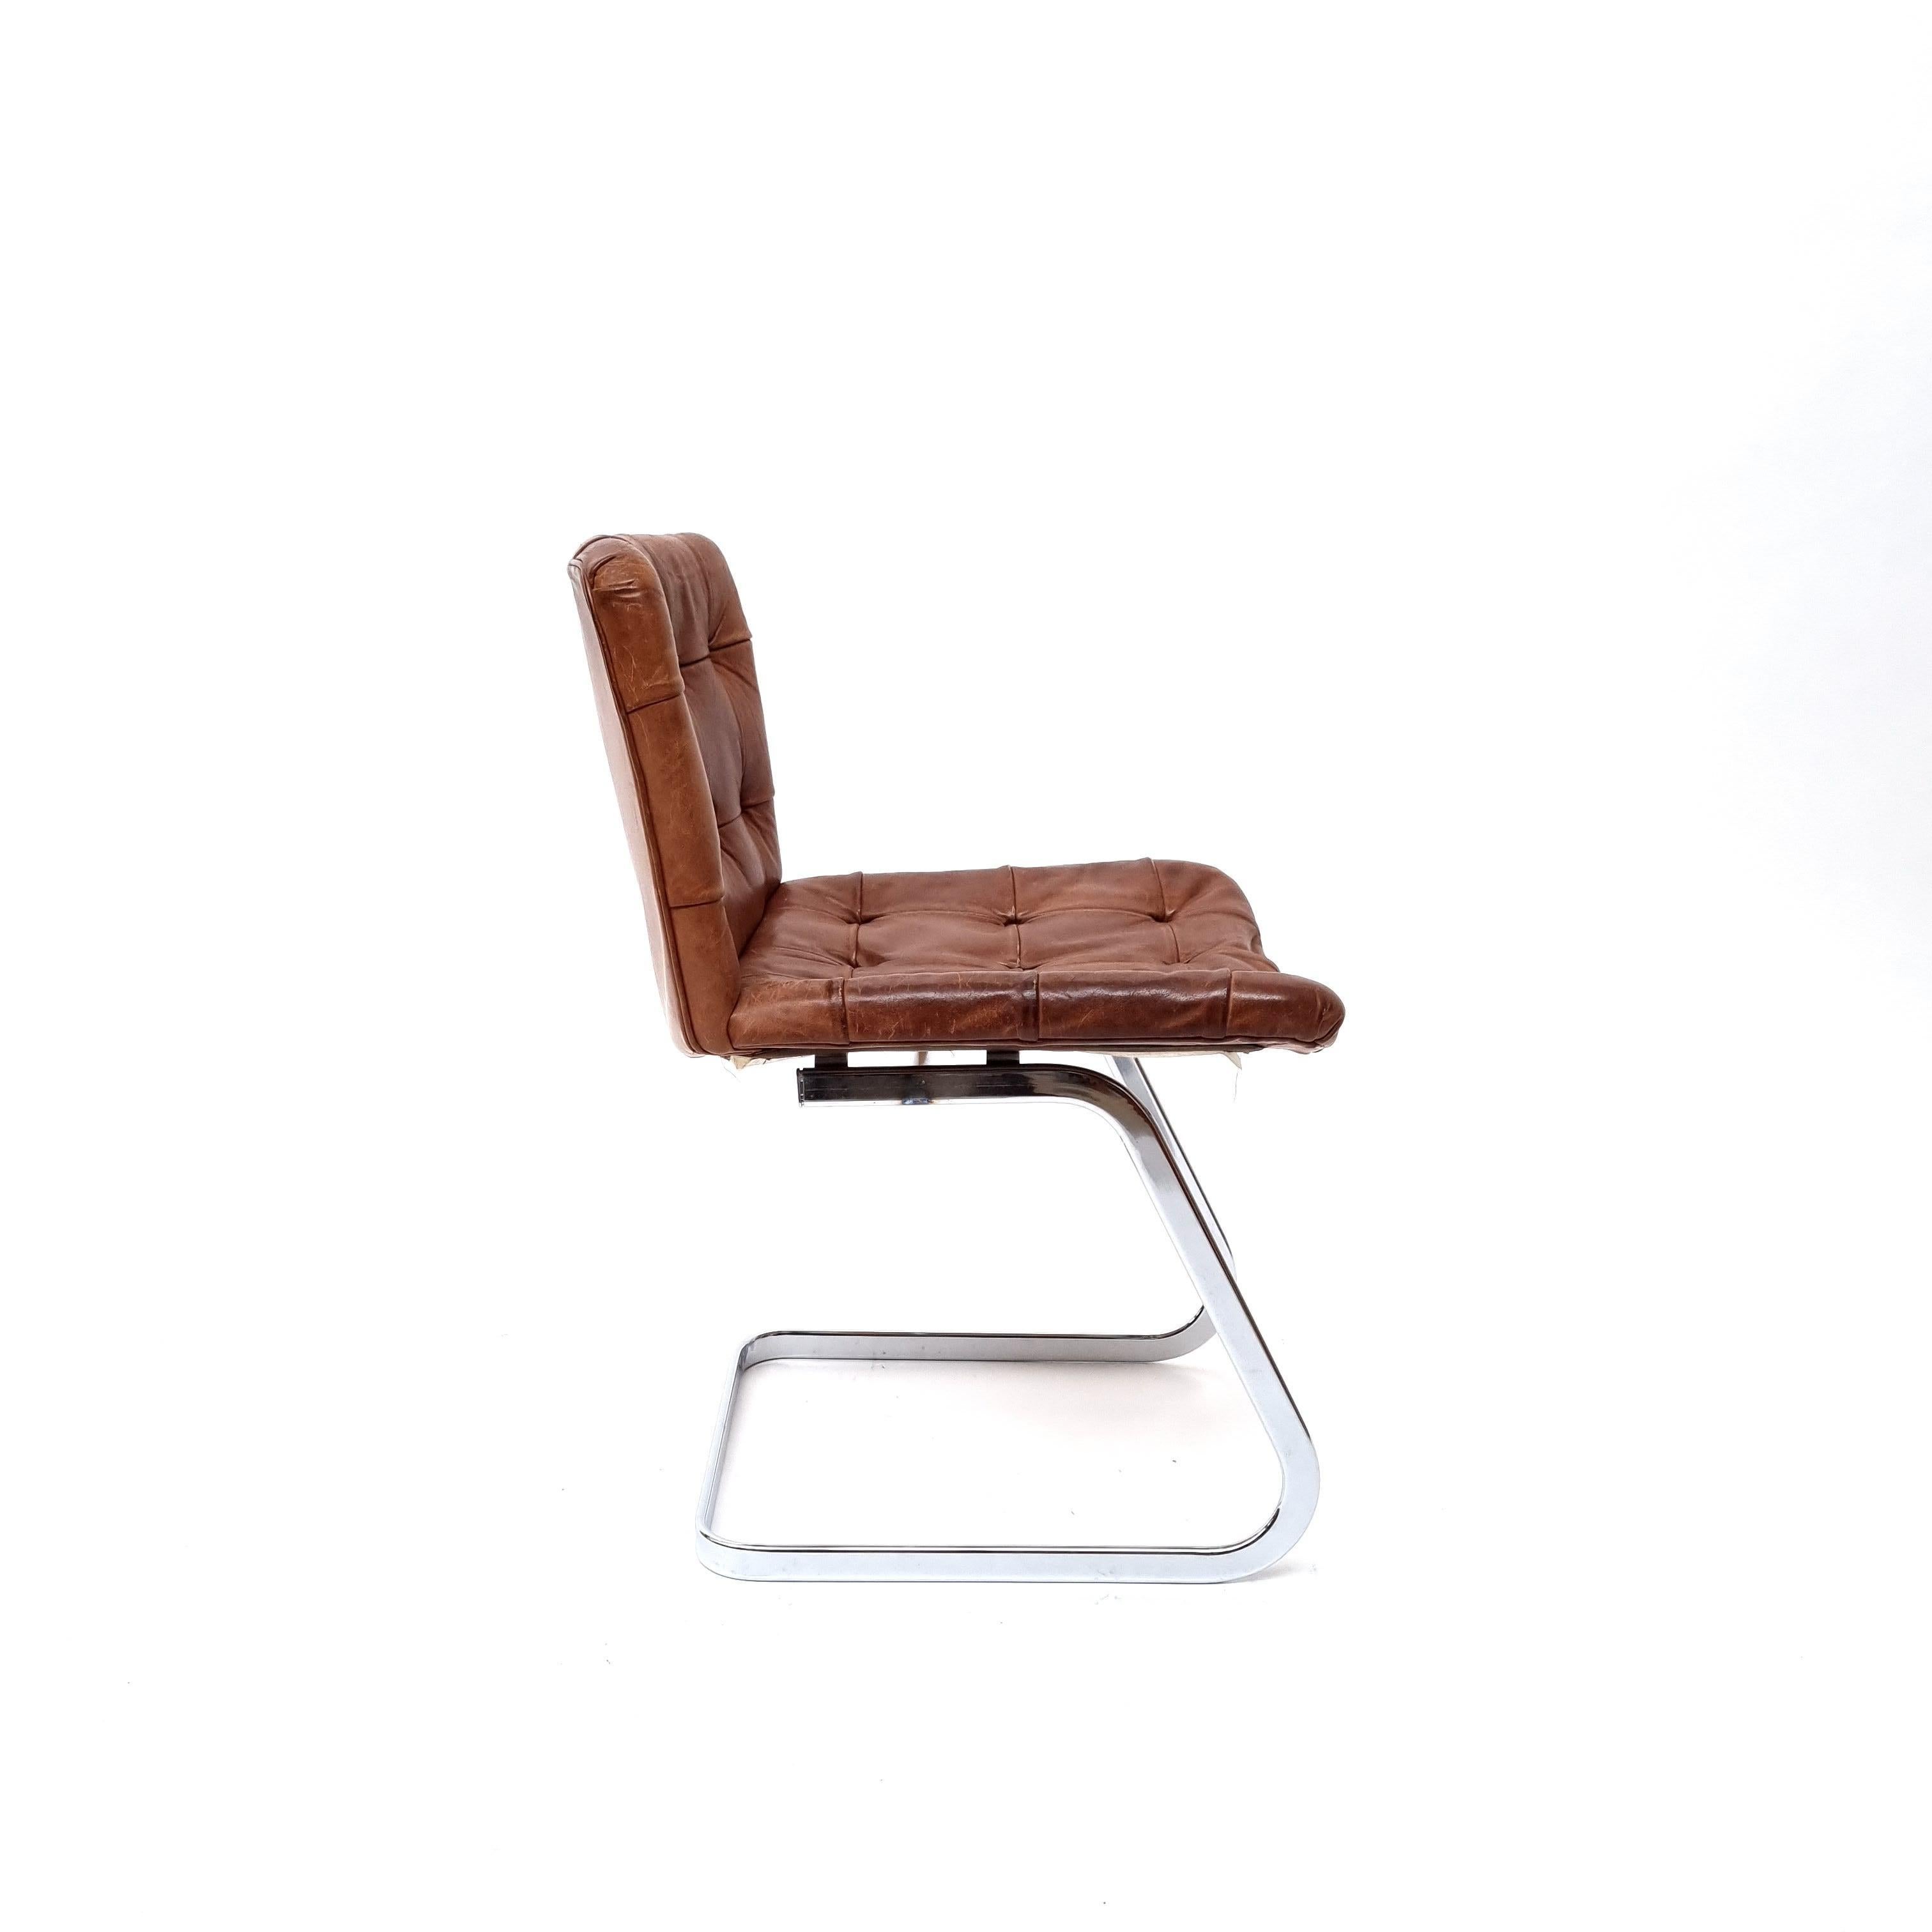 Late 20th Century De Sede Vintage RH-304 Cognac Leather Dining Chairs by Robert Hausmann, 1970s